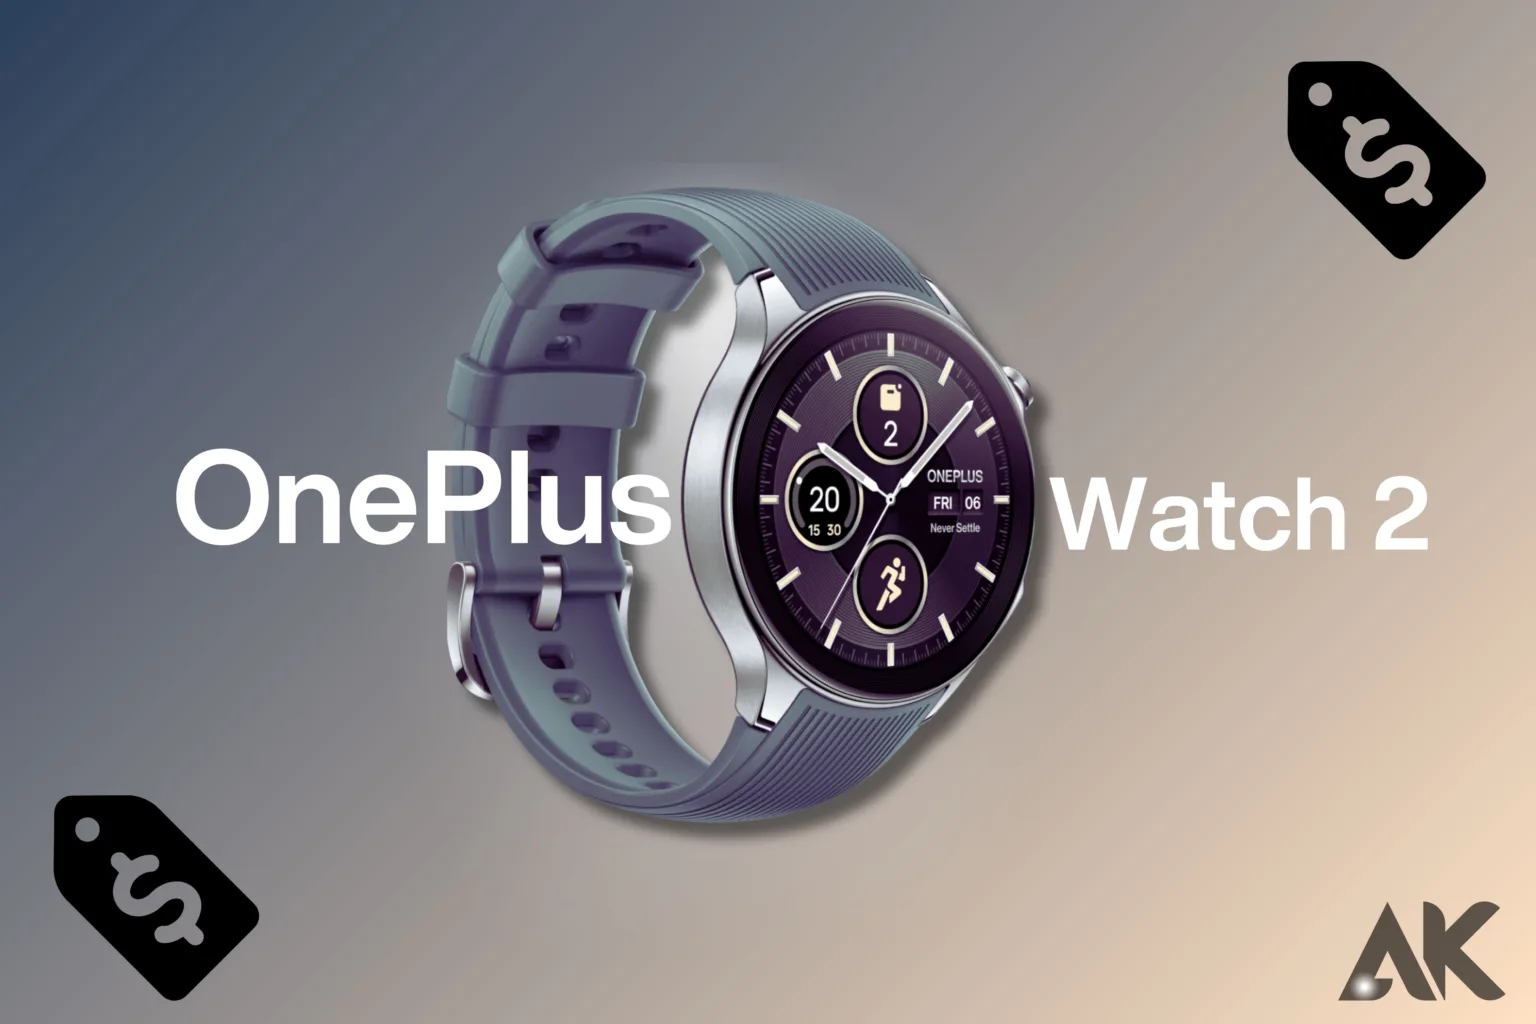 OnePlus Watch 2 price